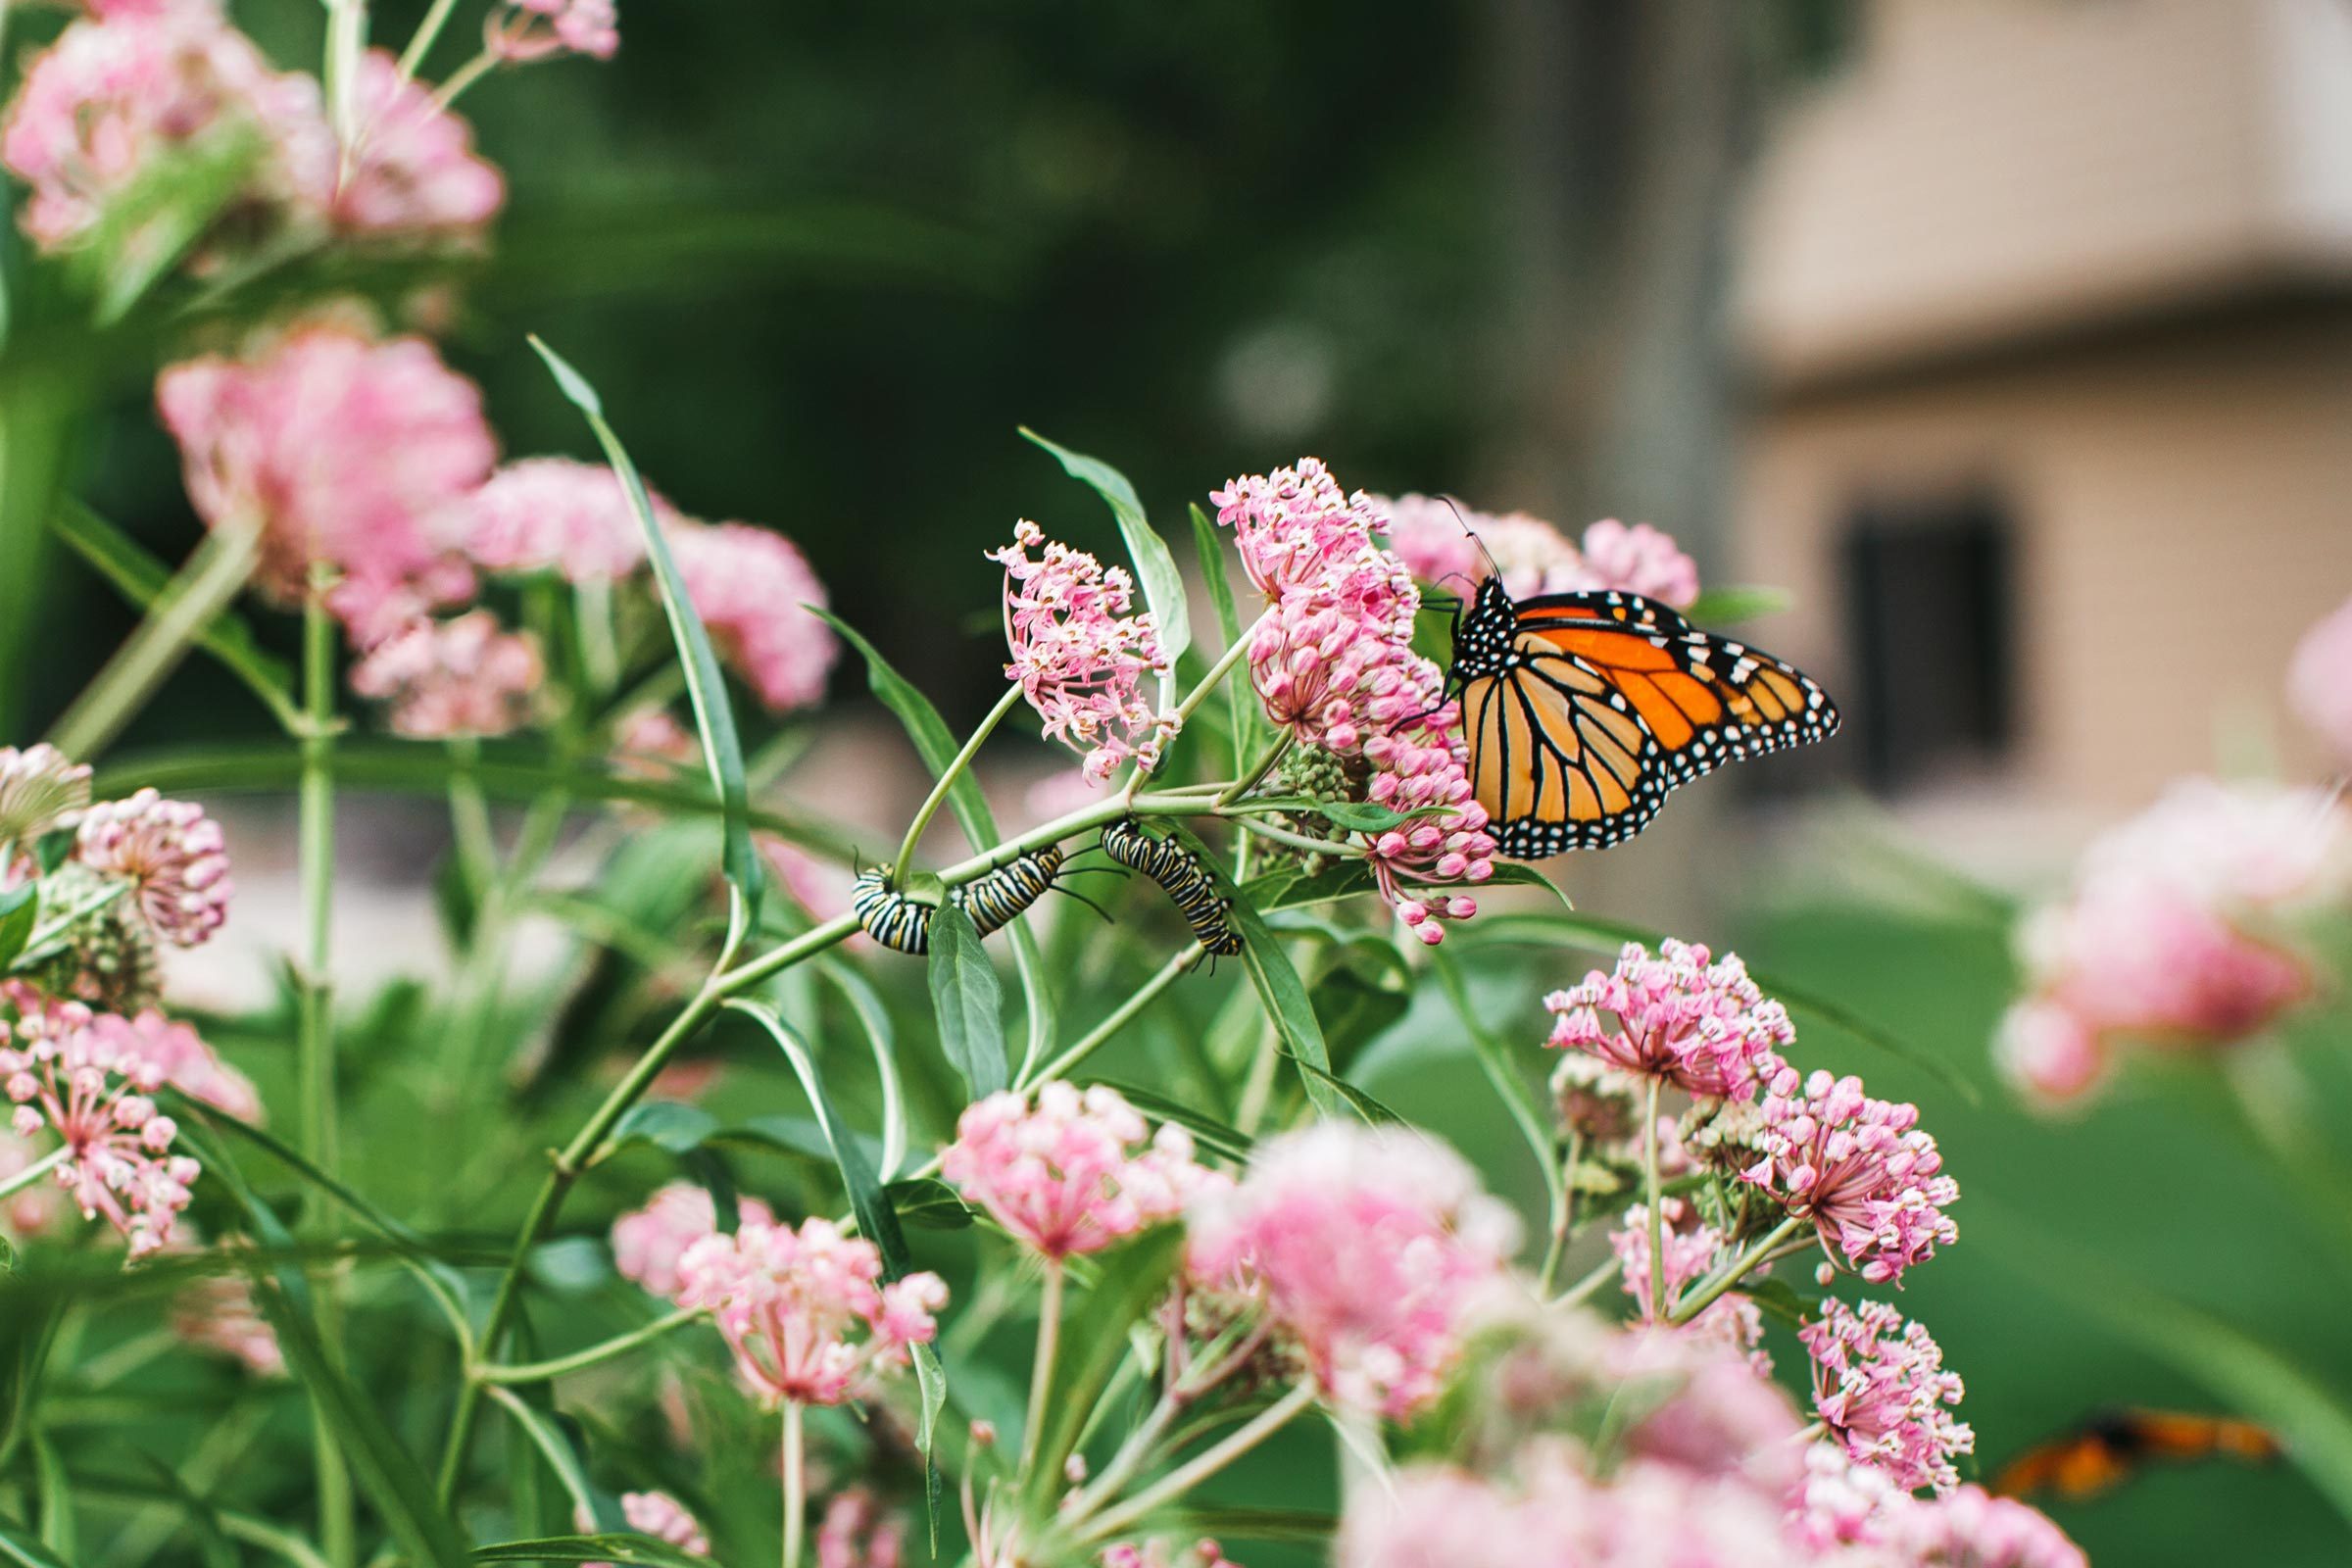 monarch butterfly on pink milkweed in front yard garden